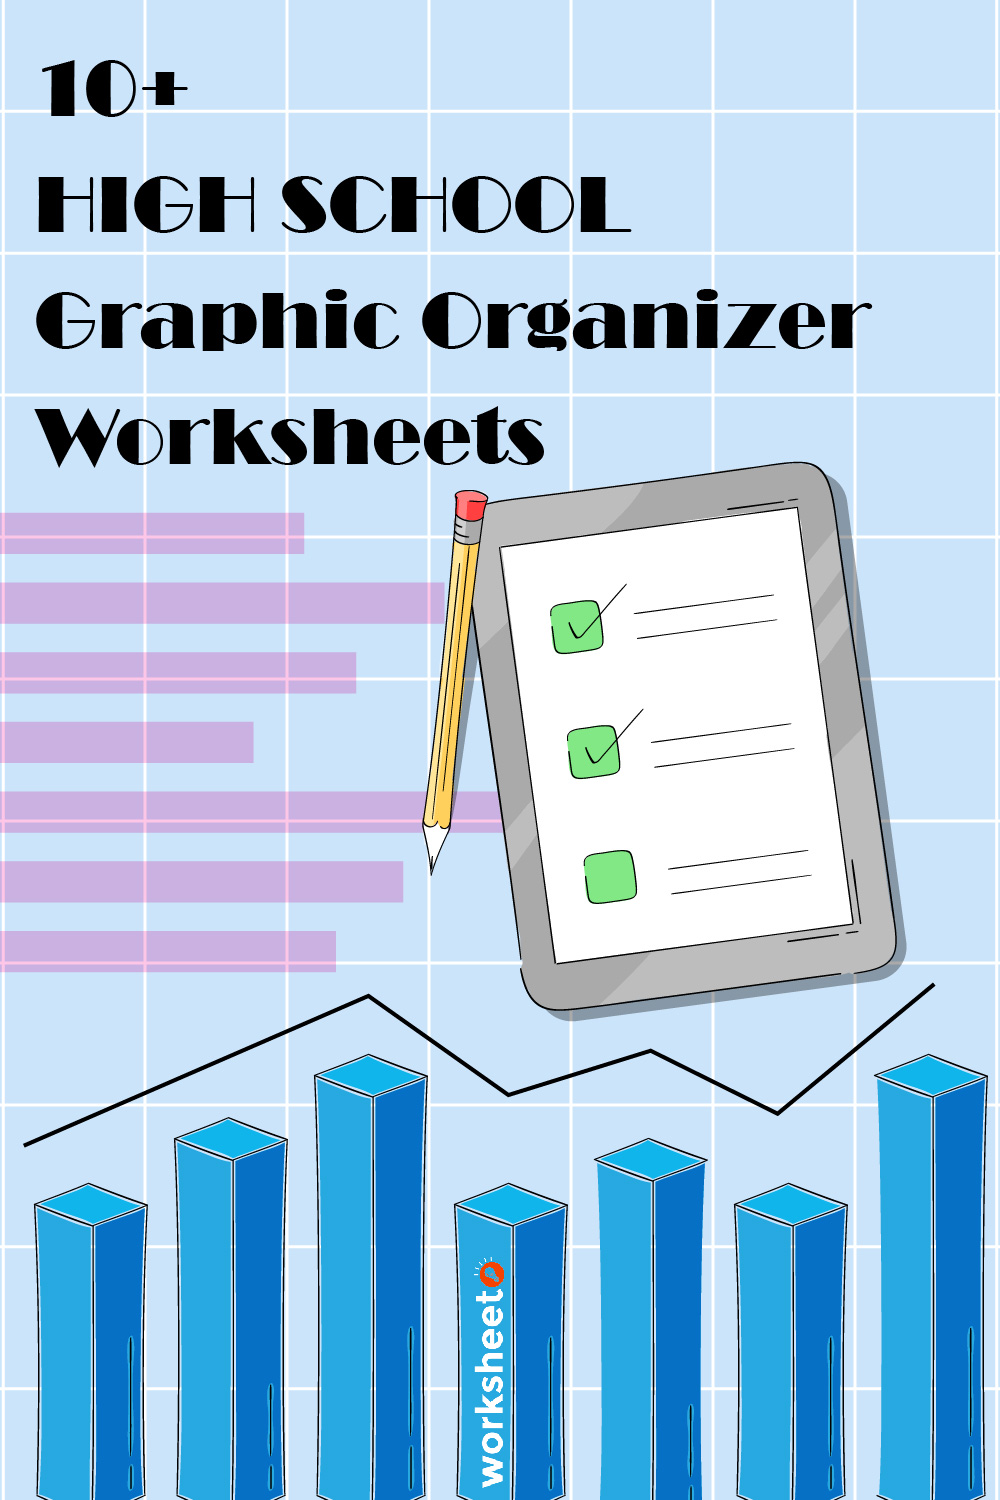 16-high-school-graphic-organizer-worksheets-free-pdf-at-worksheeto